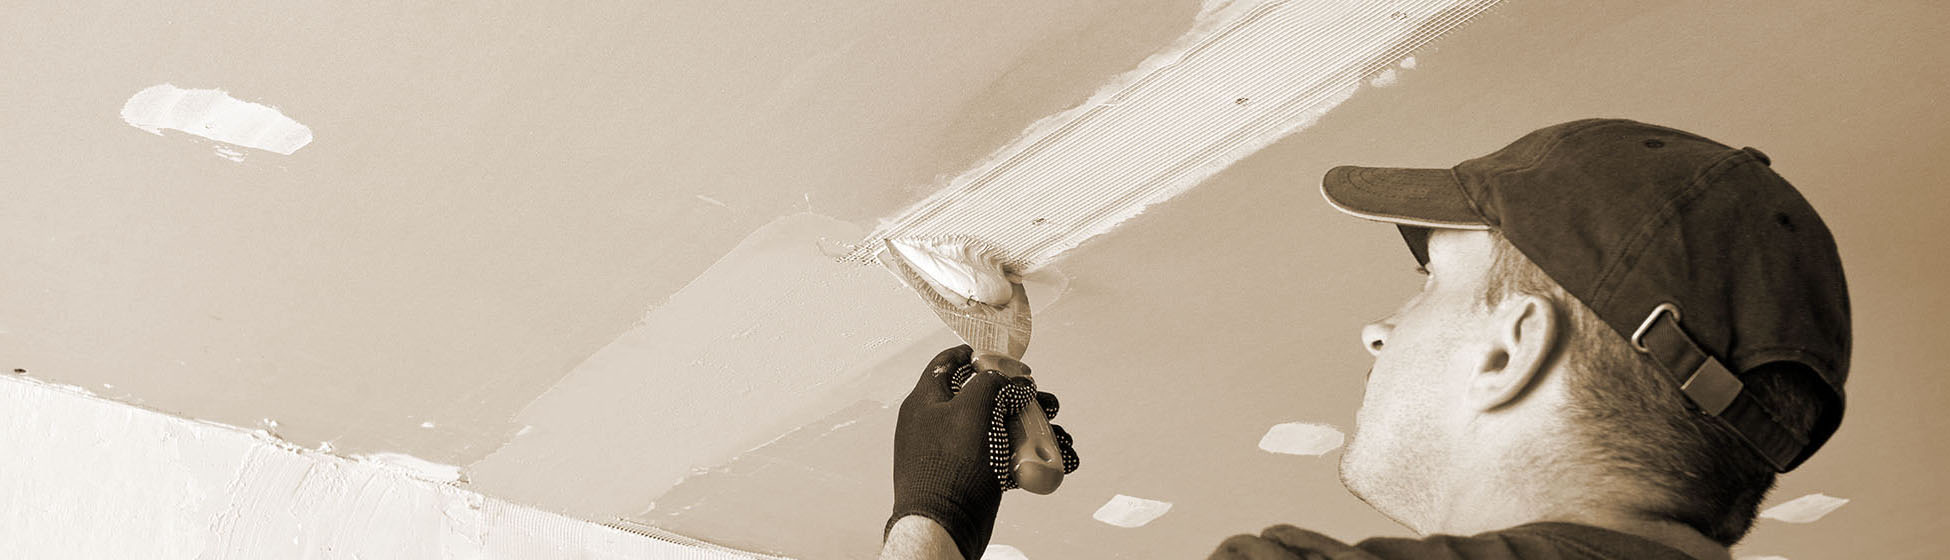 Installation faux plafond avec spot